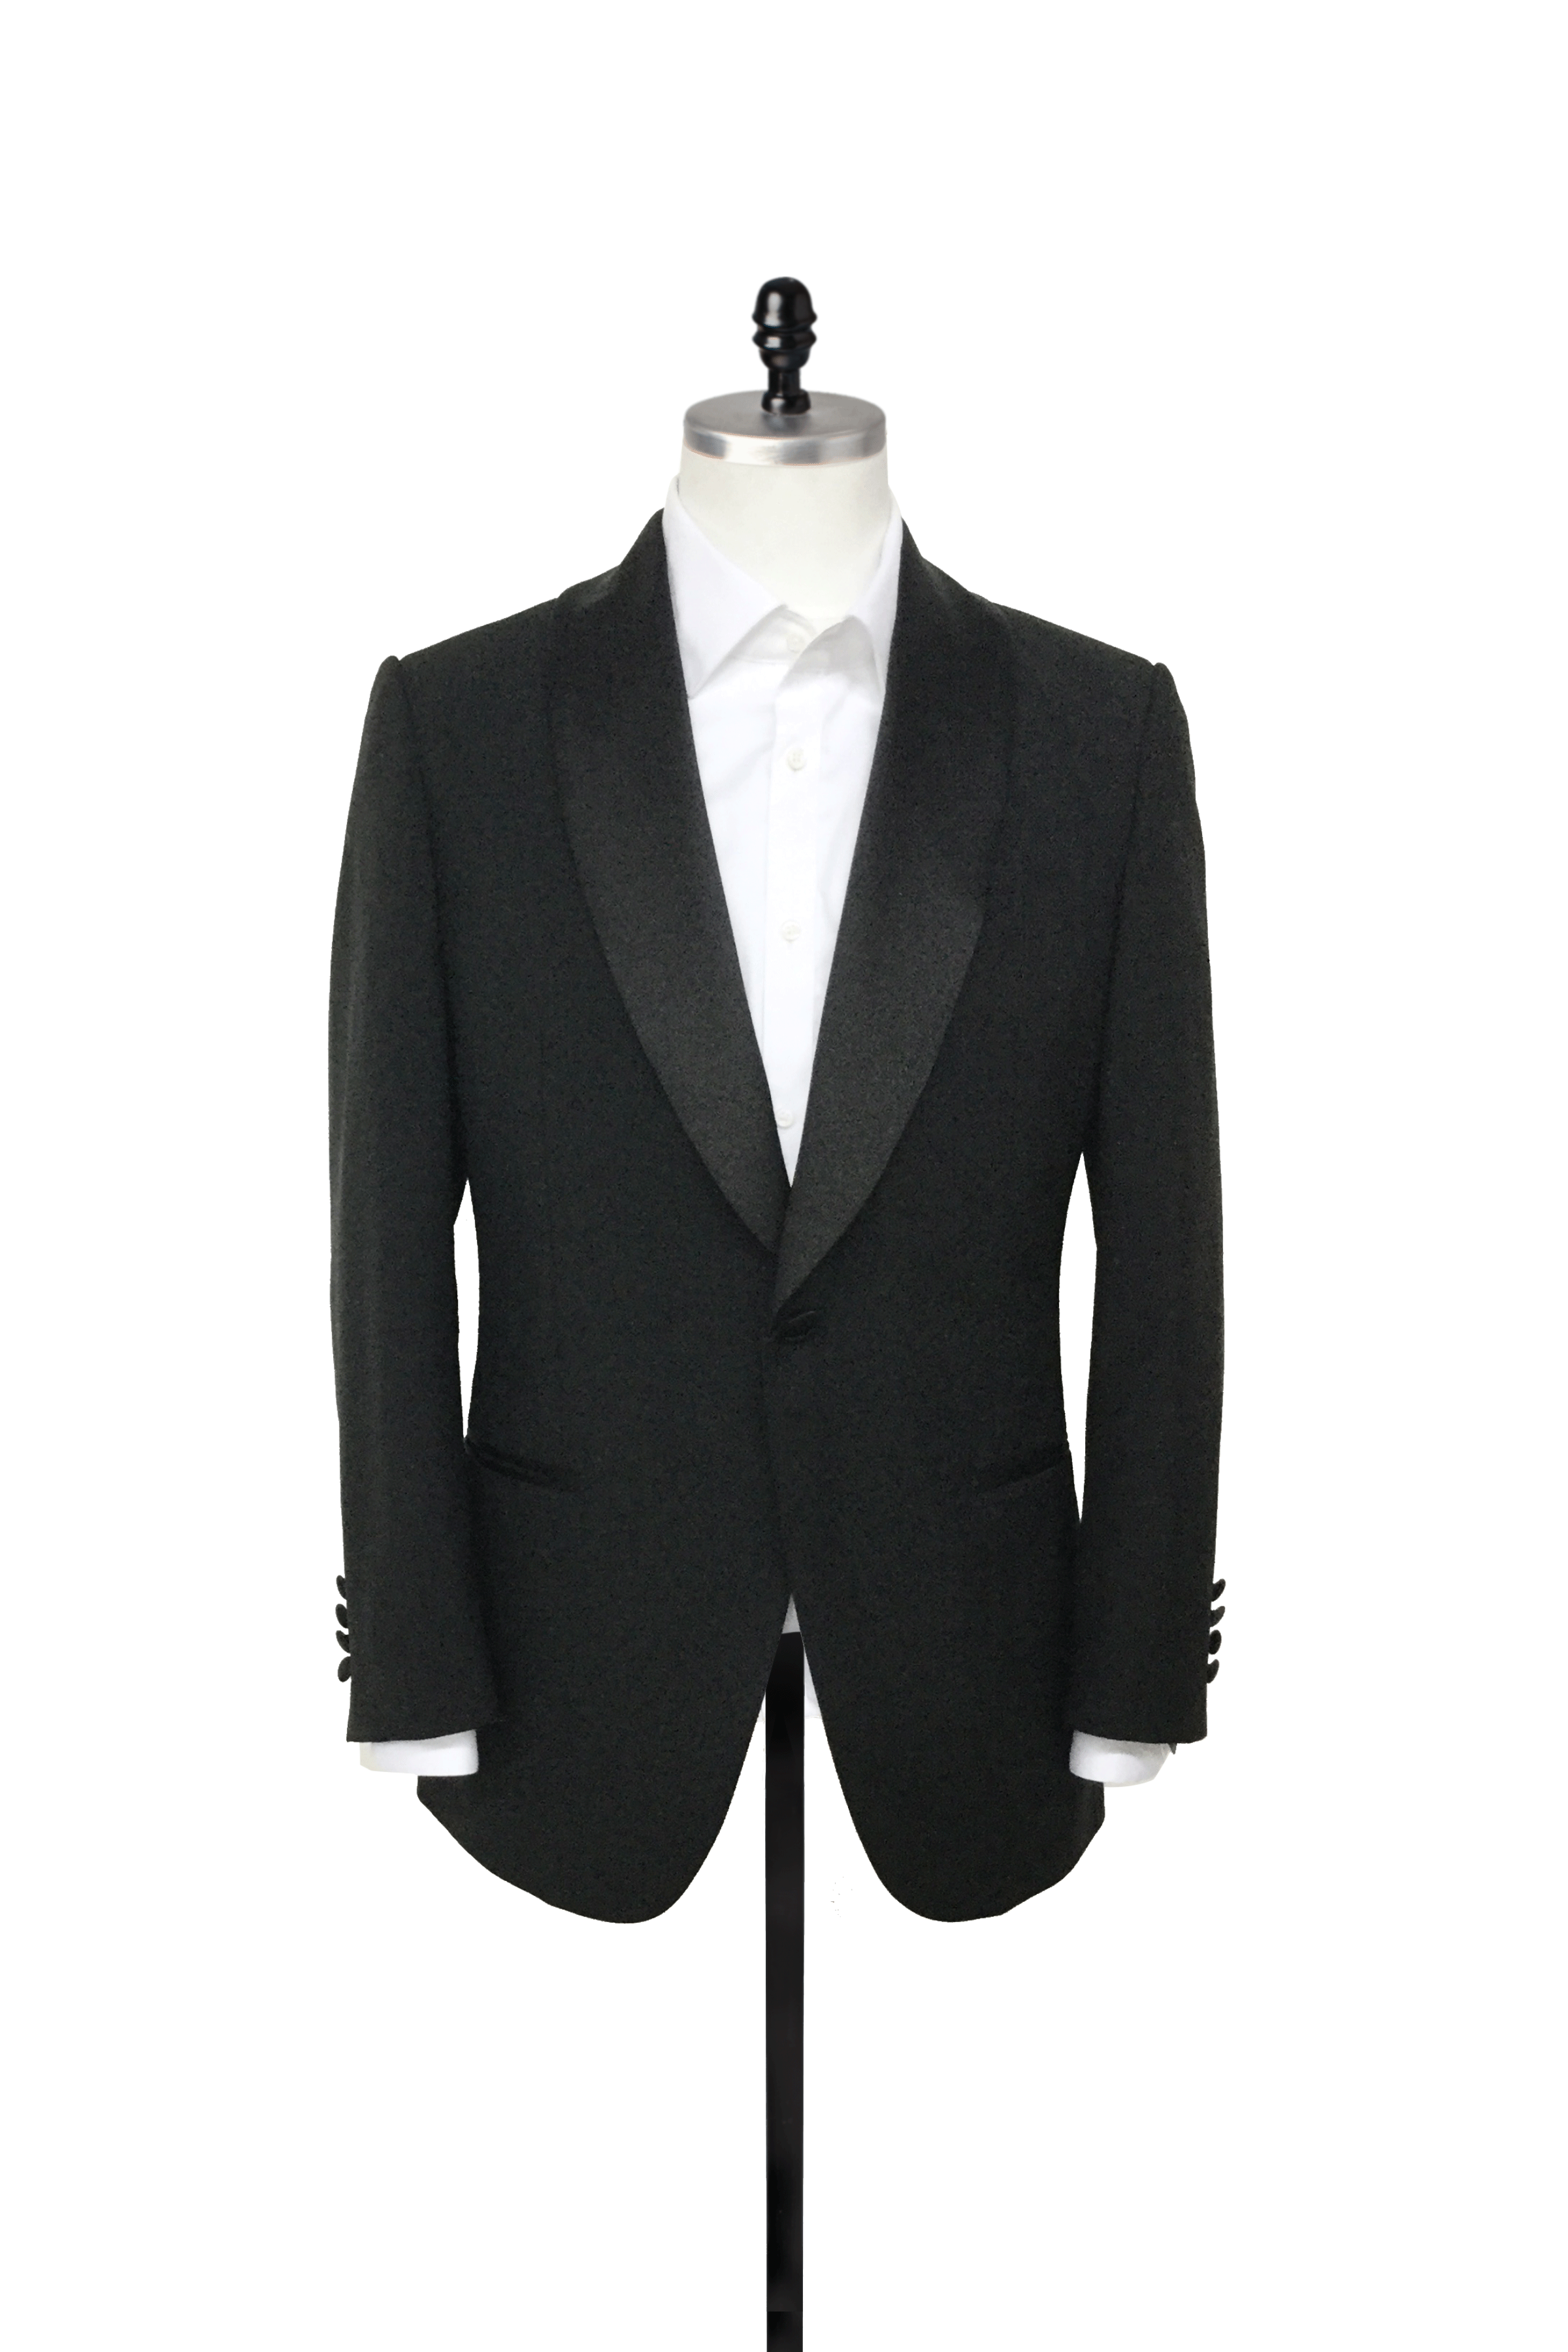 Vitale Barberis Canonico Black Tuxedo Jacket by Knot Standard